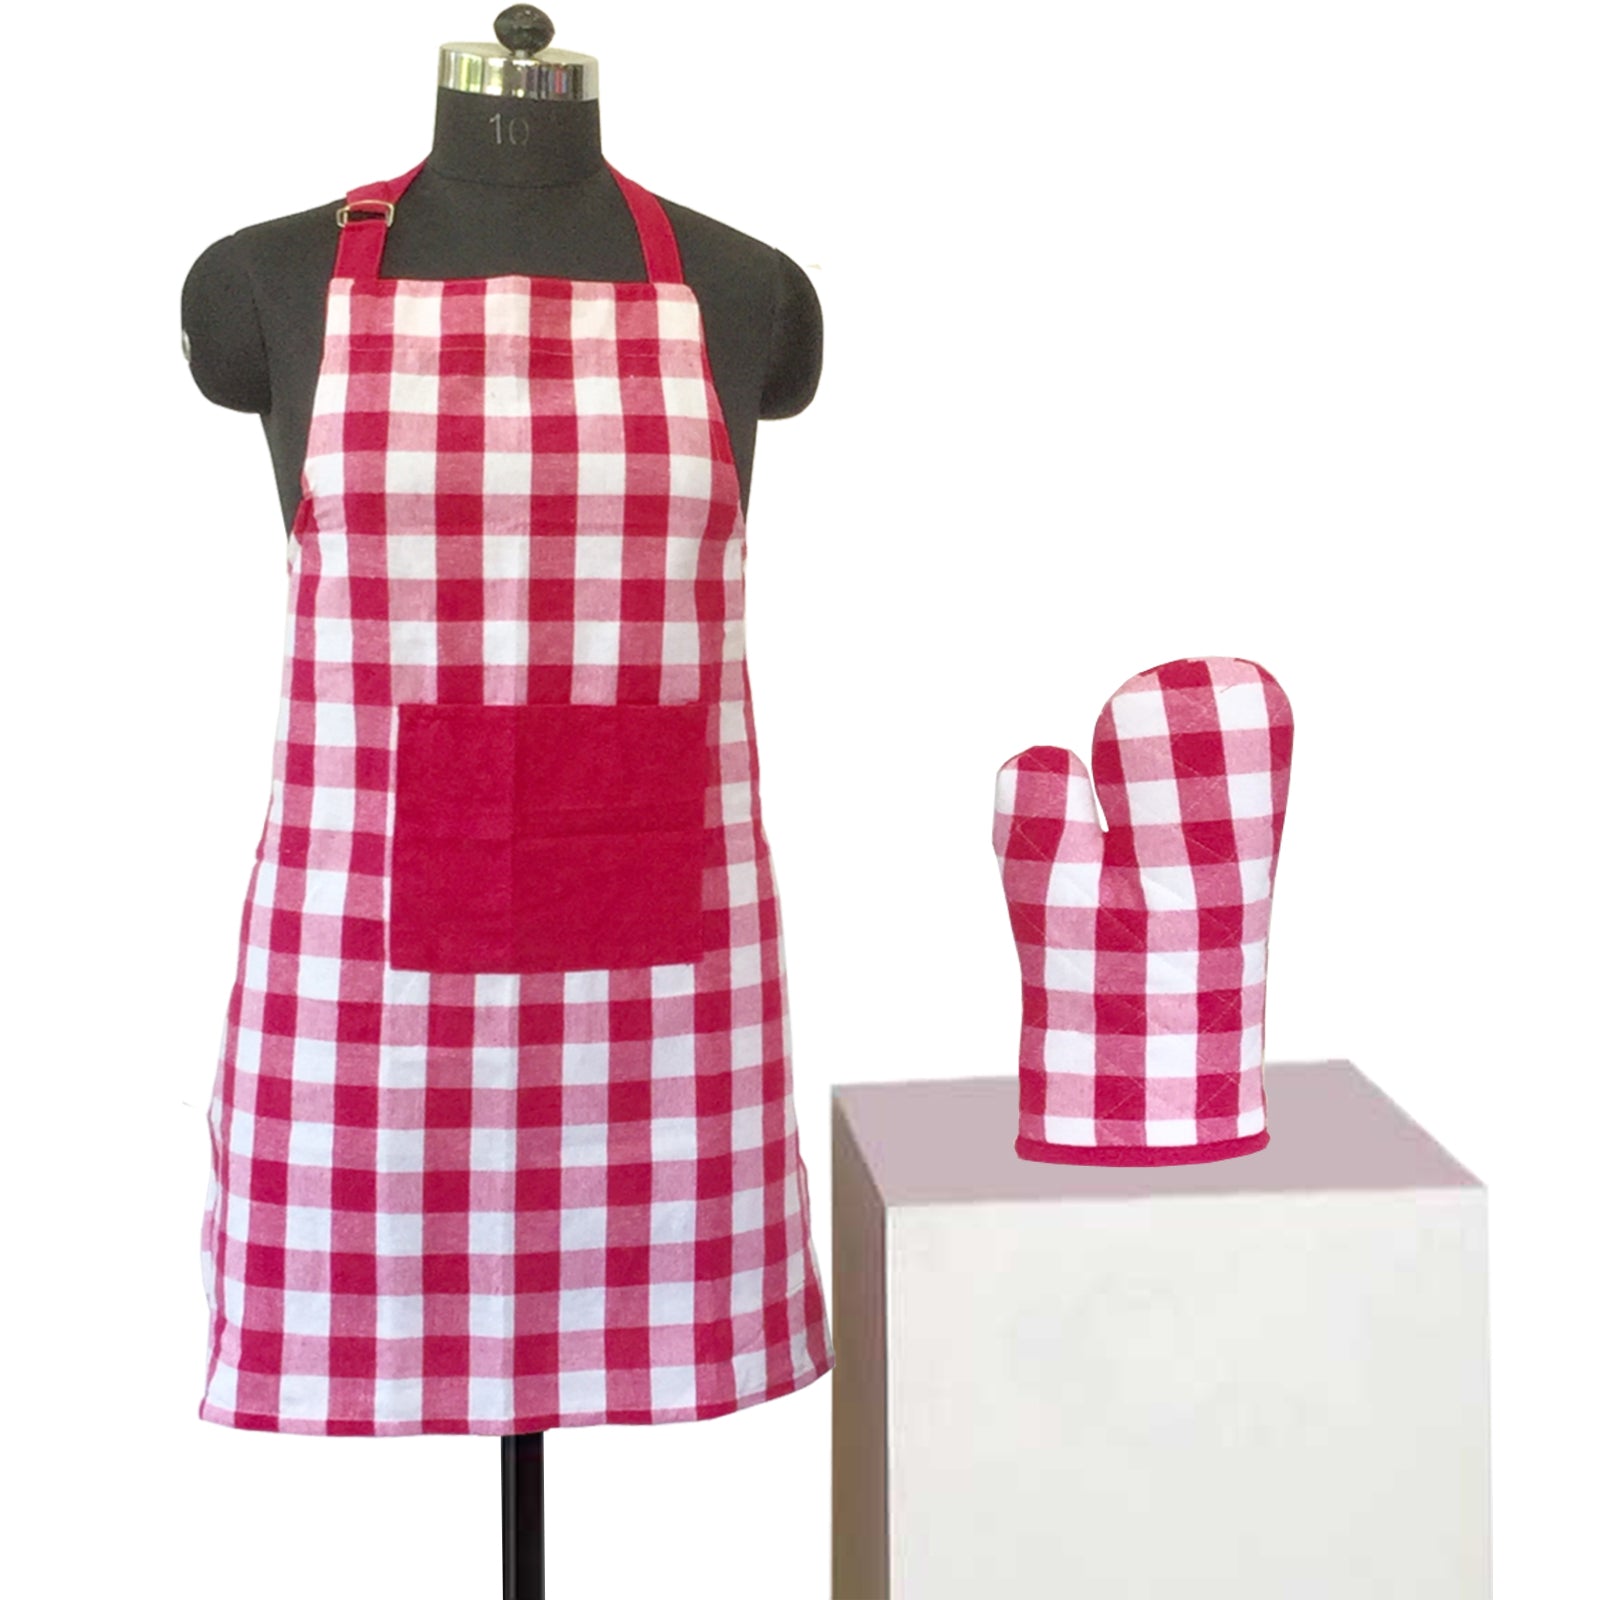 Lushomes Checks Lilac Kitchen Cooking Apron Set for Women (2 Pc Set, Oven Glove 17 x 32 cm, Apron 60 x 80 cms)